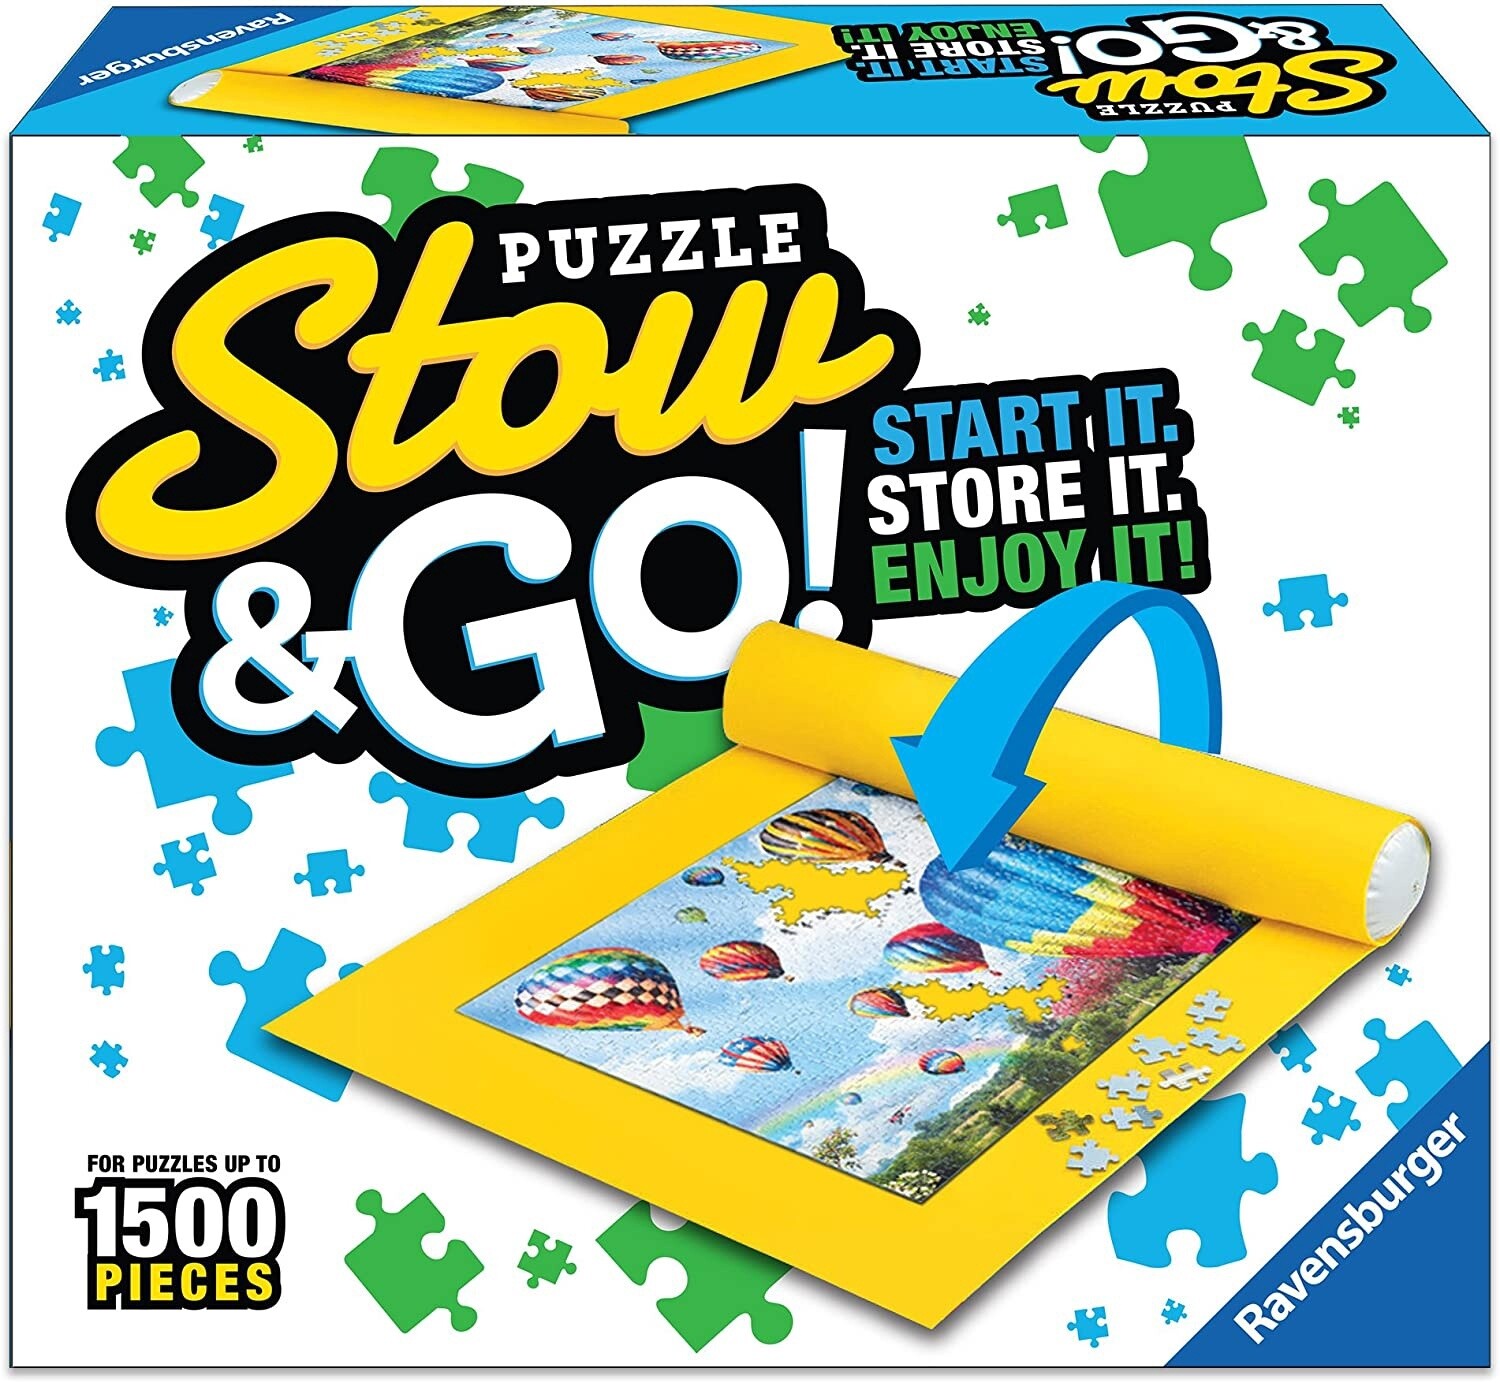 Ravensburger Puzzle Stow & Go! Mat